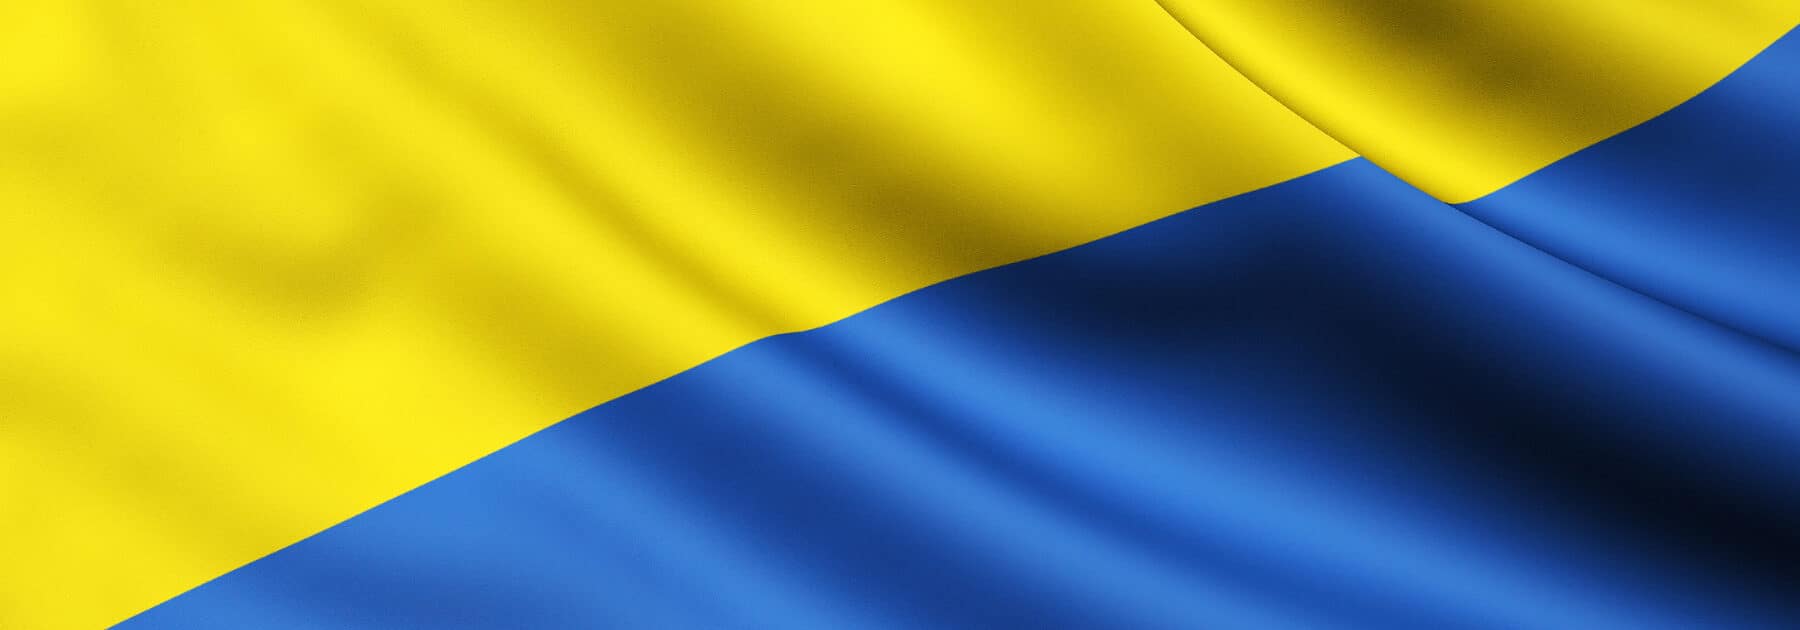 THE CATERHAM UKRAINIAN SUPPORT TEAM EXTEND THANKS